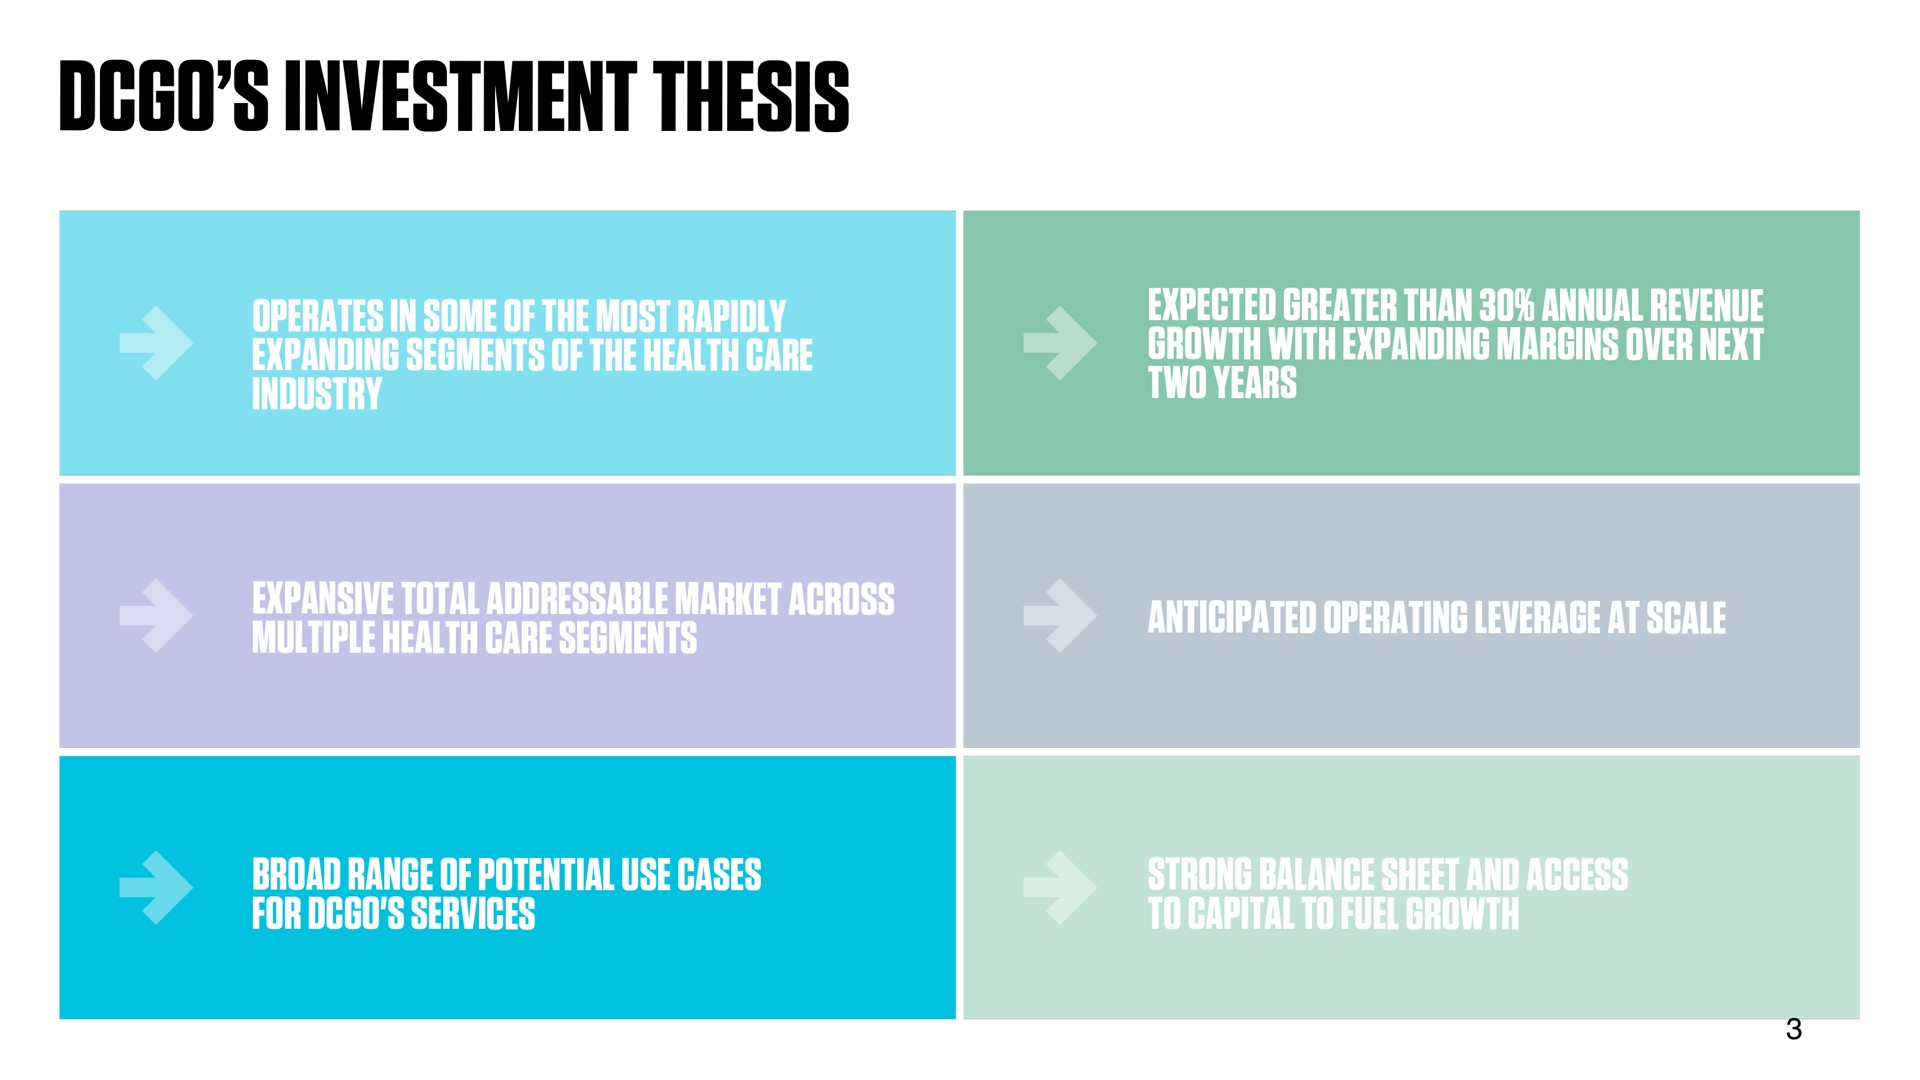 investment thesis a atta tut a sue multiple health gare segments pure broad range of potential use gases | DocGo